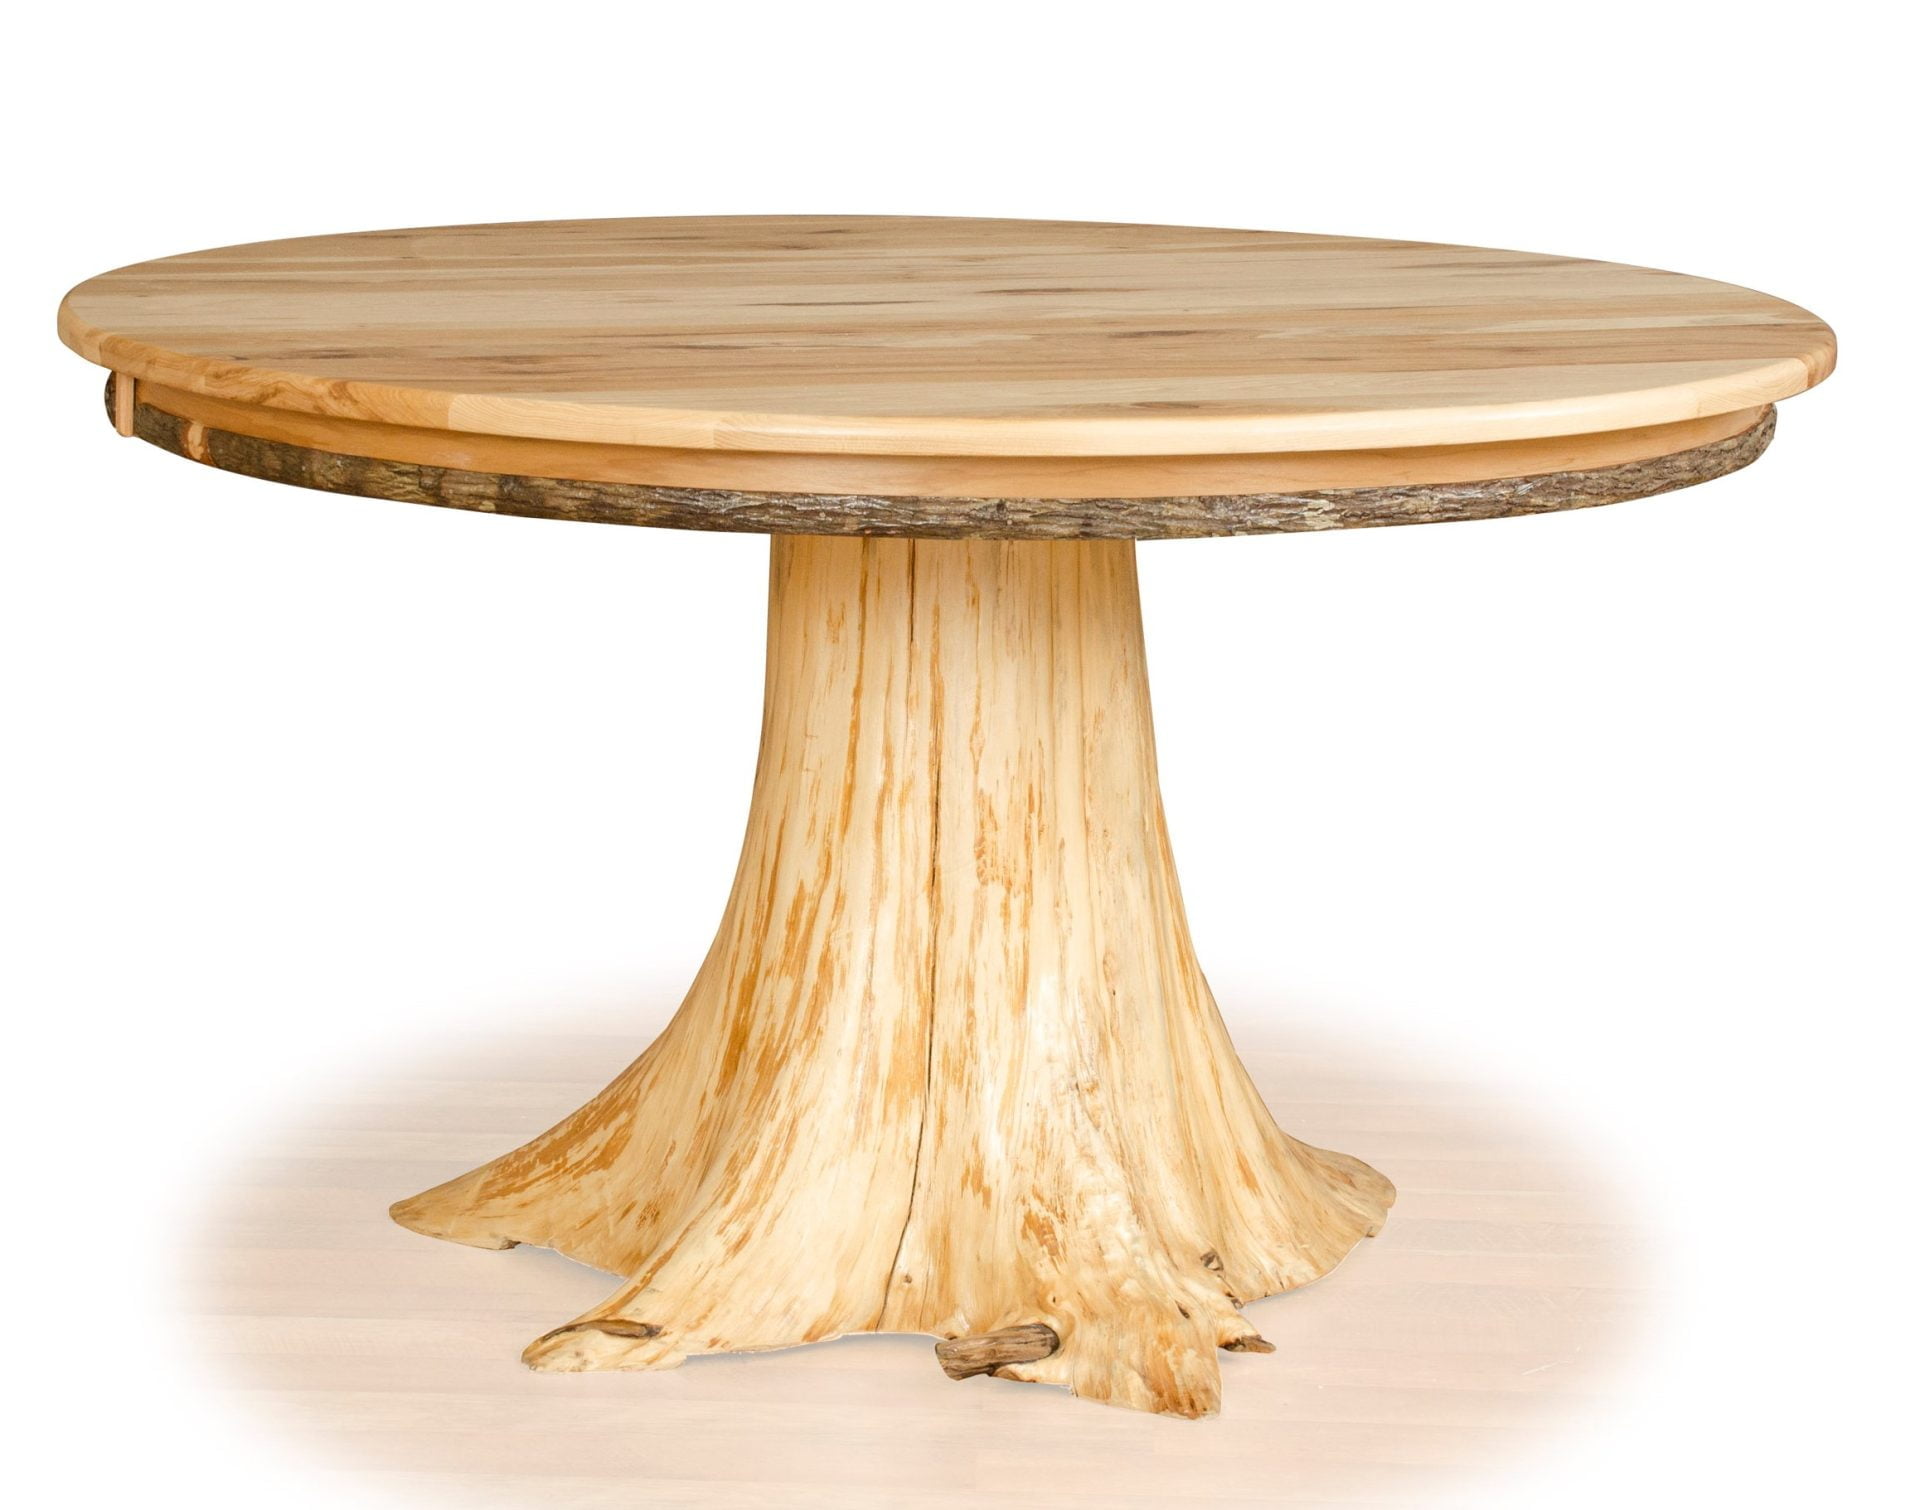 Hickory & Oak Round Pub Table – Stump Base